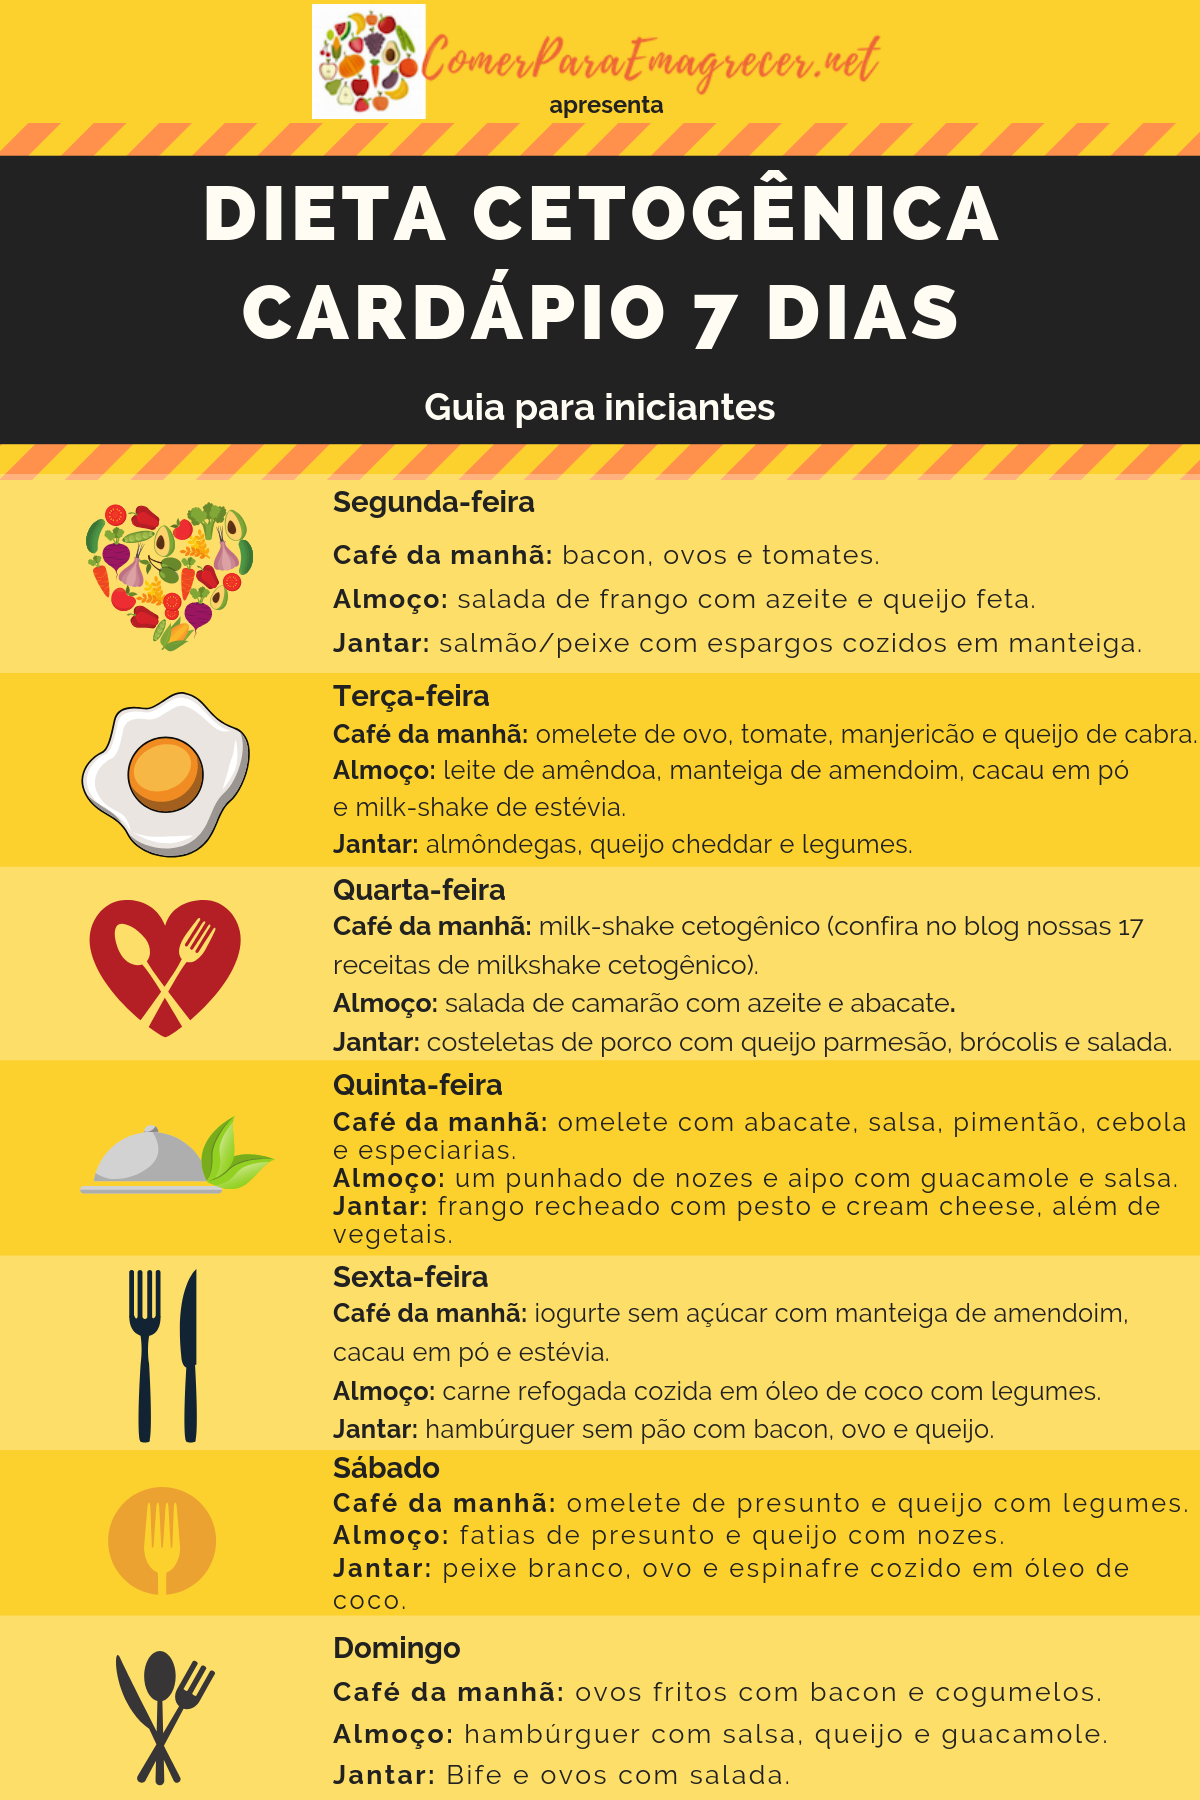 dieta cetogenica cardapio semanal - dieta cetogênica cardápio